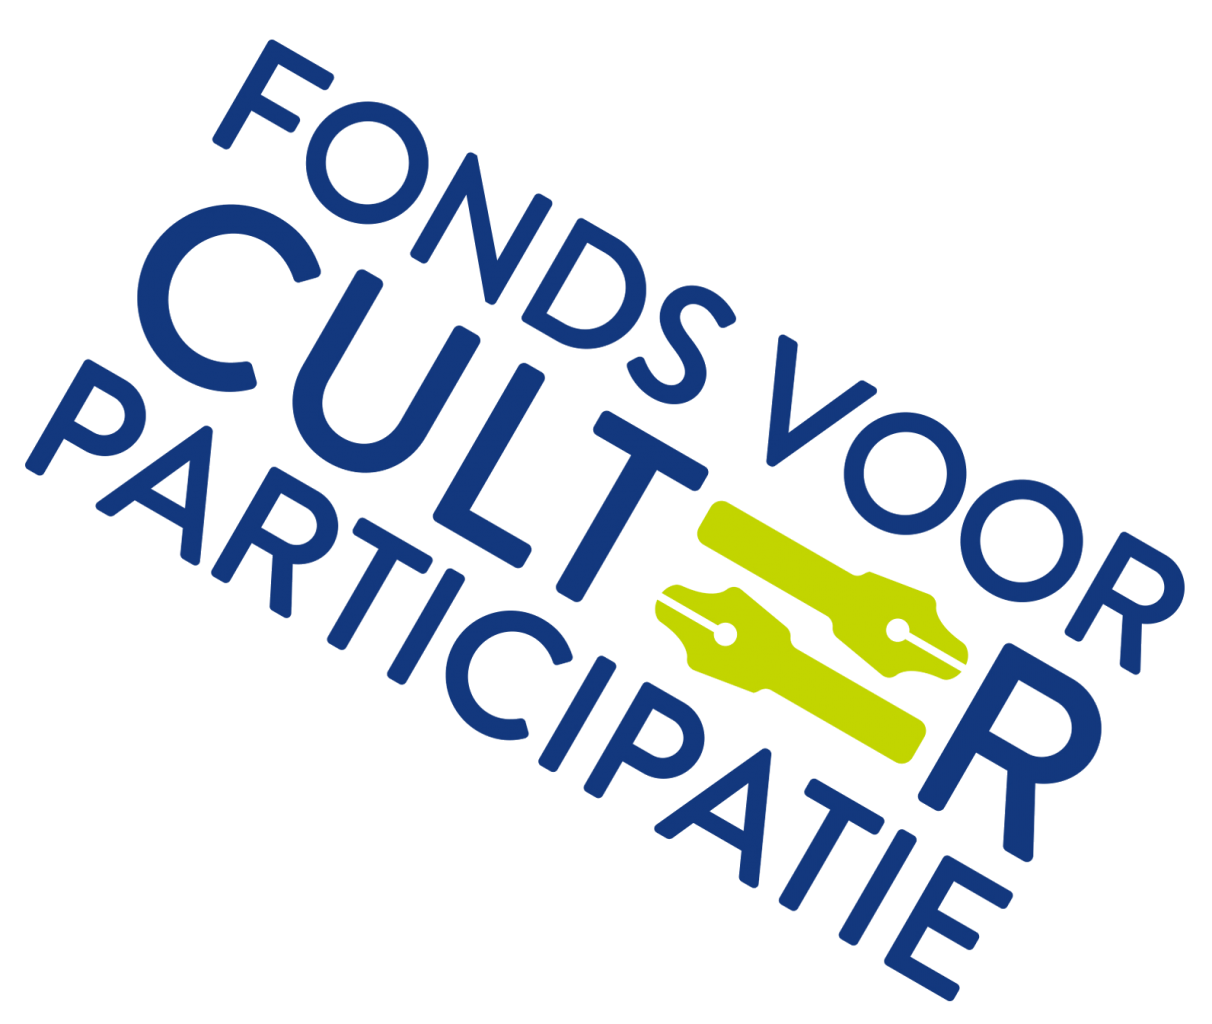 FCP Logo